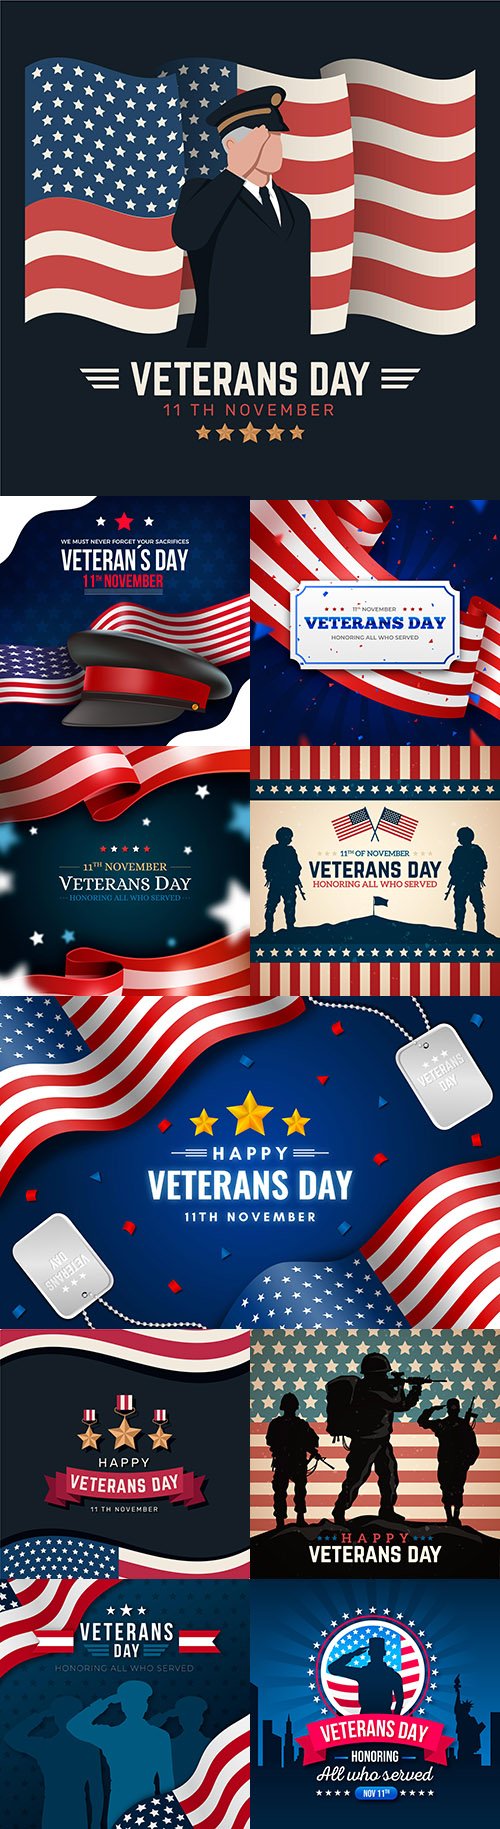 Veterans Day holiday design flat style illustration